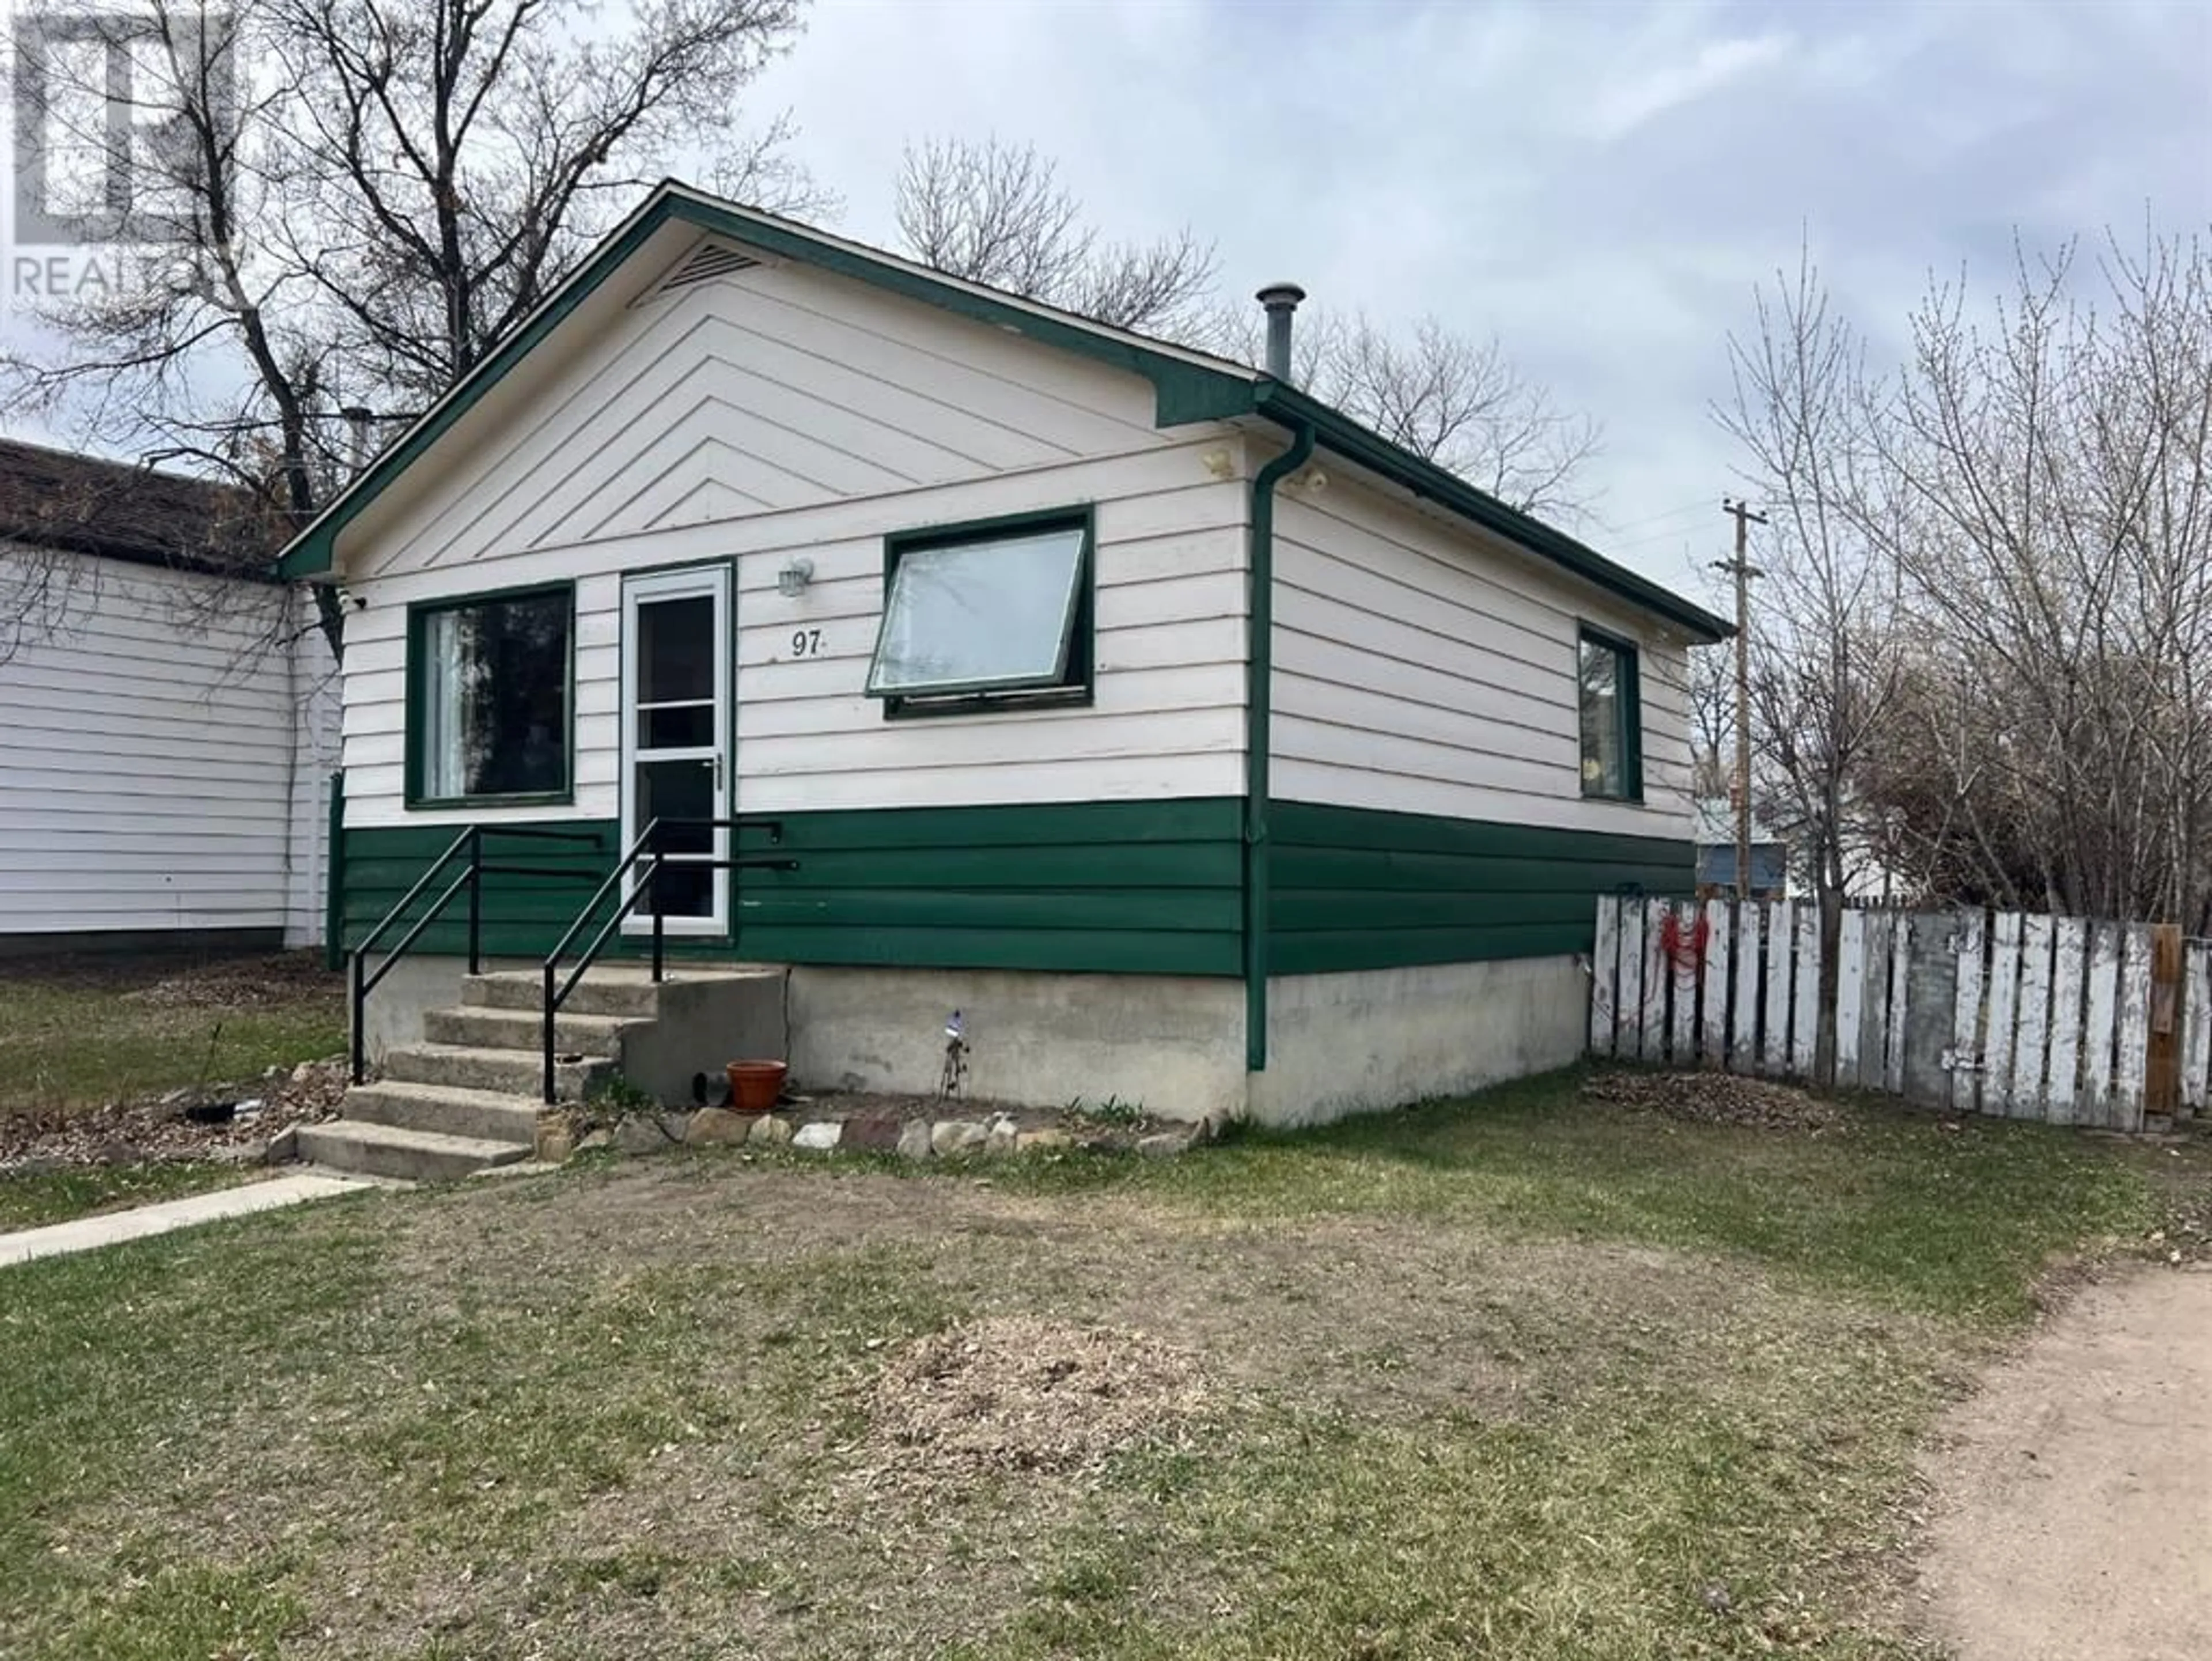 Cottage for 97 Villa Street, Drumheller Alberta T0J0Y1